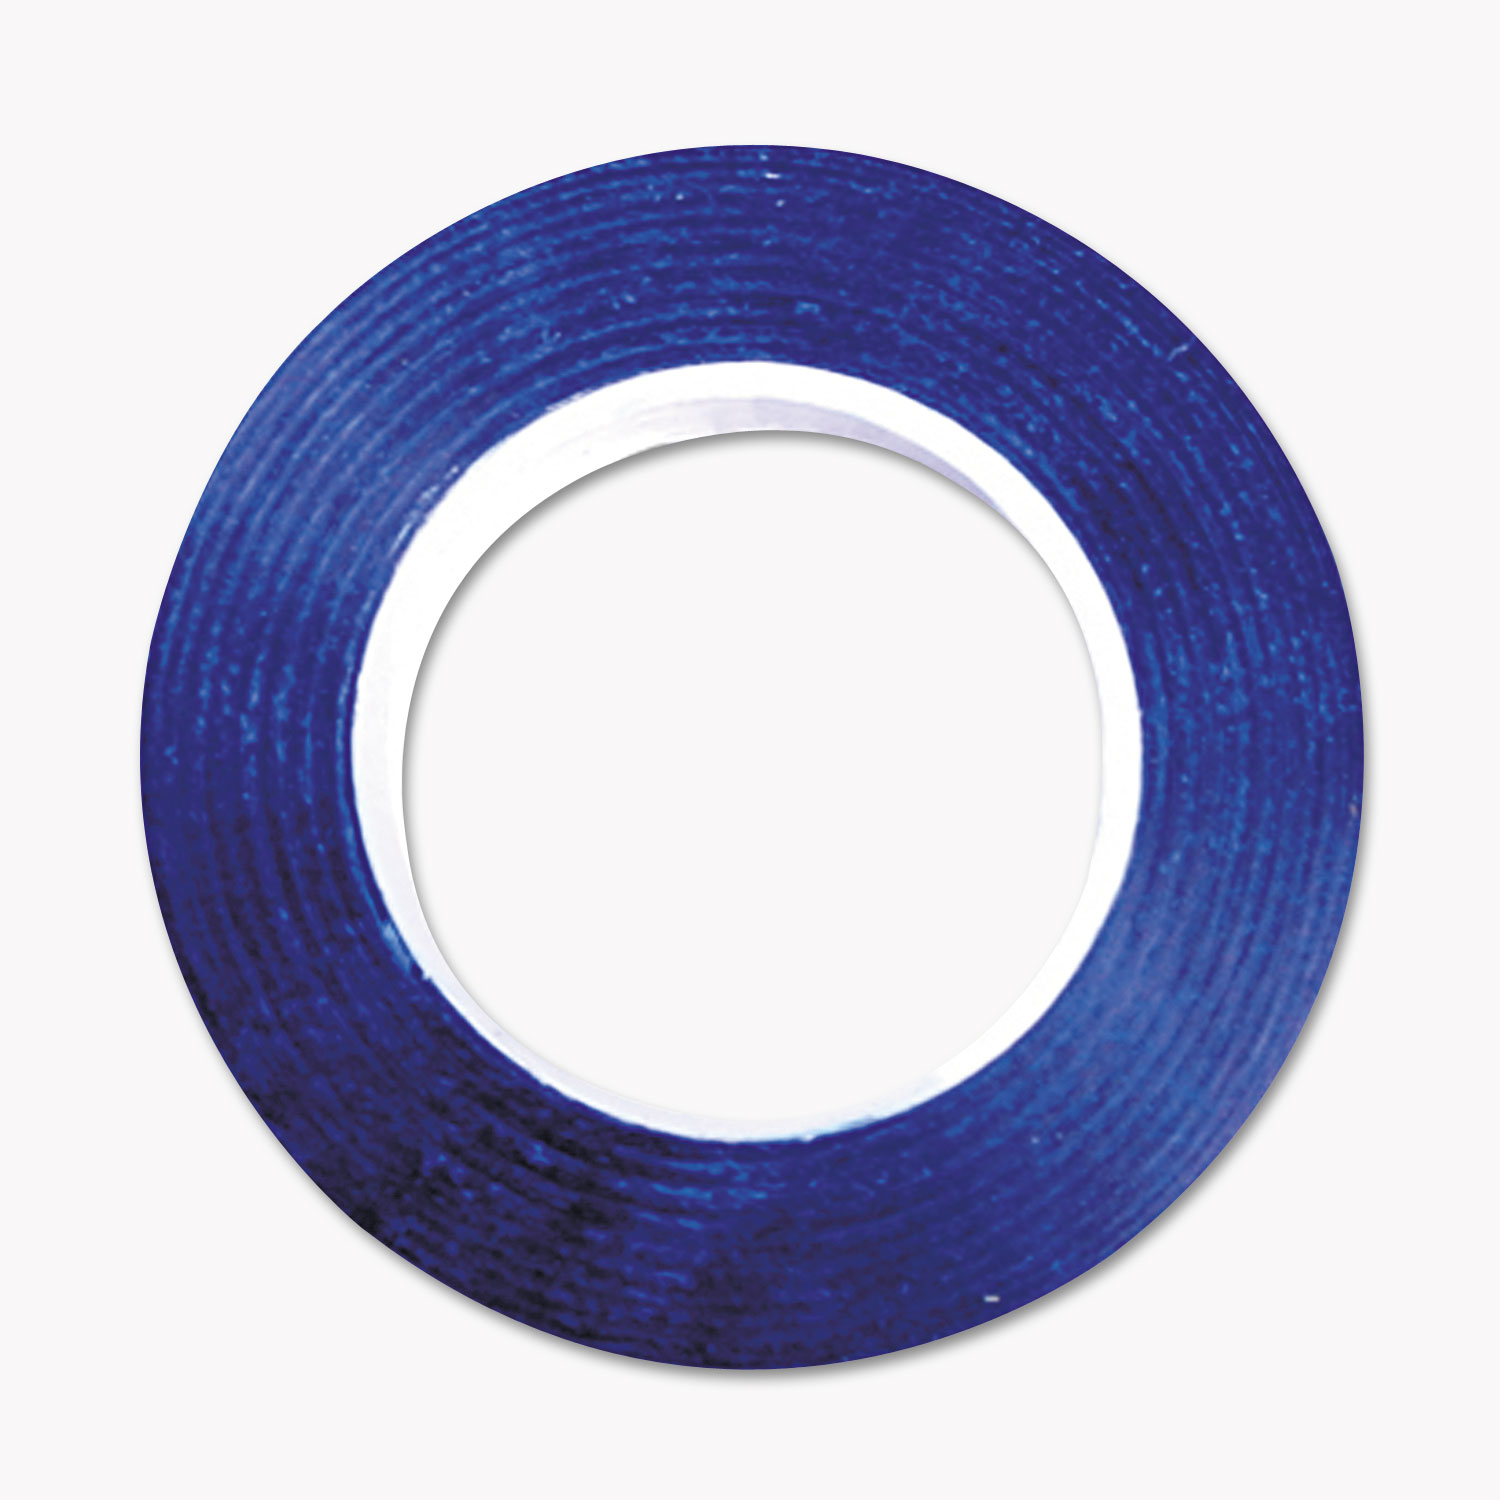  COSCO 098076 Art Tape, 0.25 x 27 ft, Blue (COS098076) 